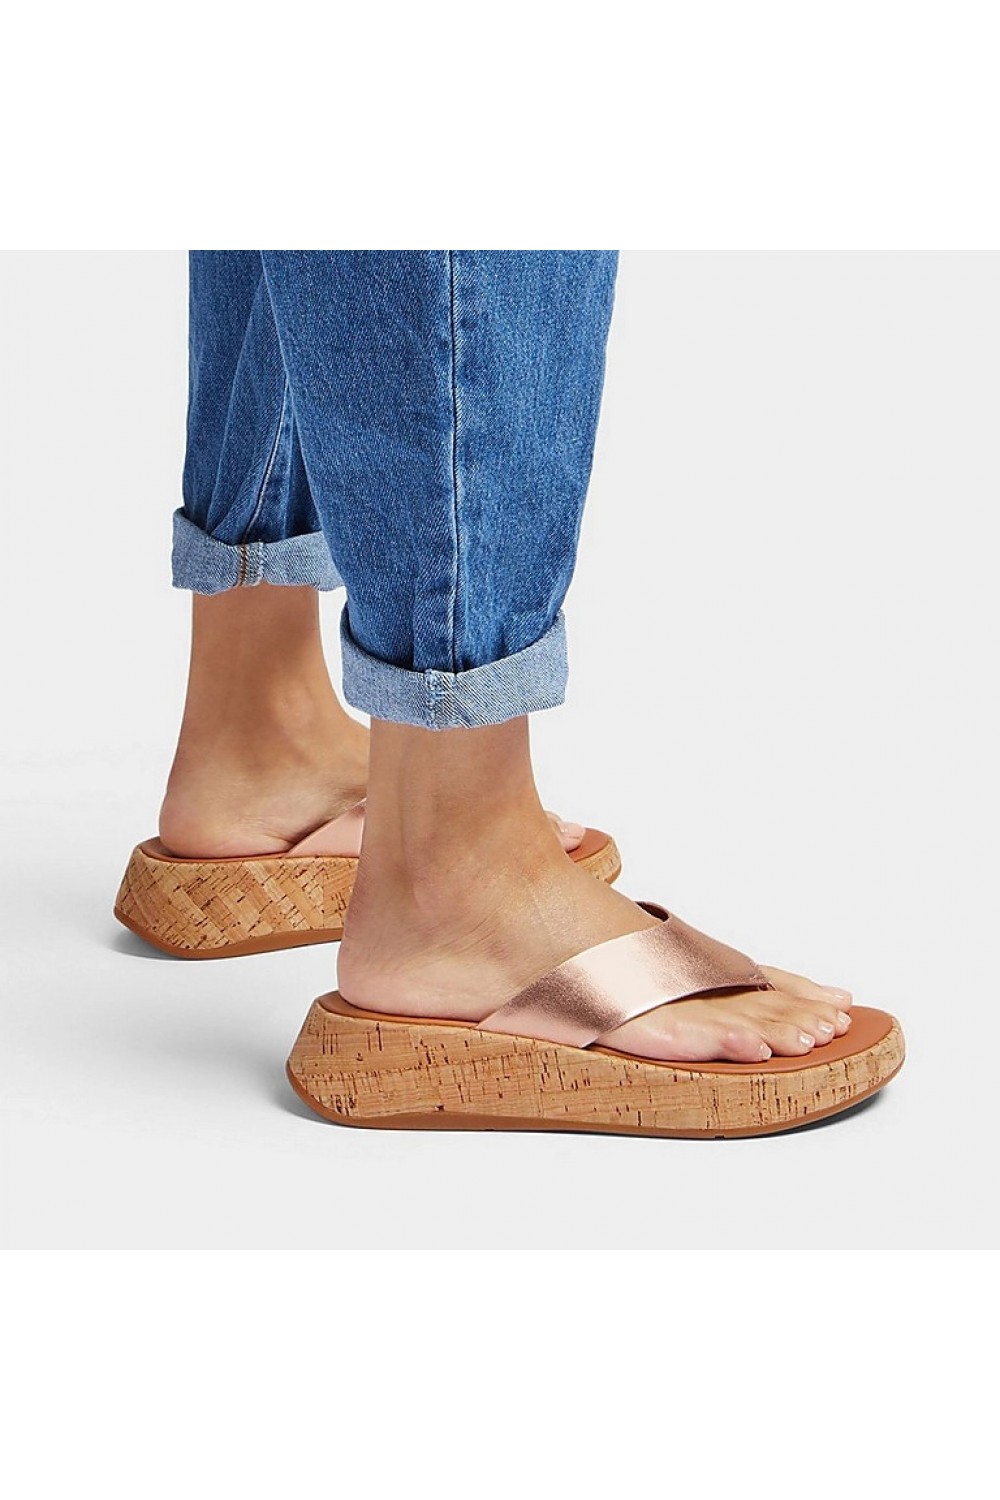 Fitflop F-MODE Metallic Leather/Cork Flatform Toe-Post Sandals Rose Gold